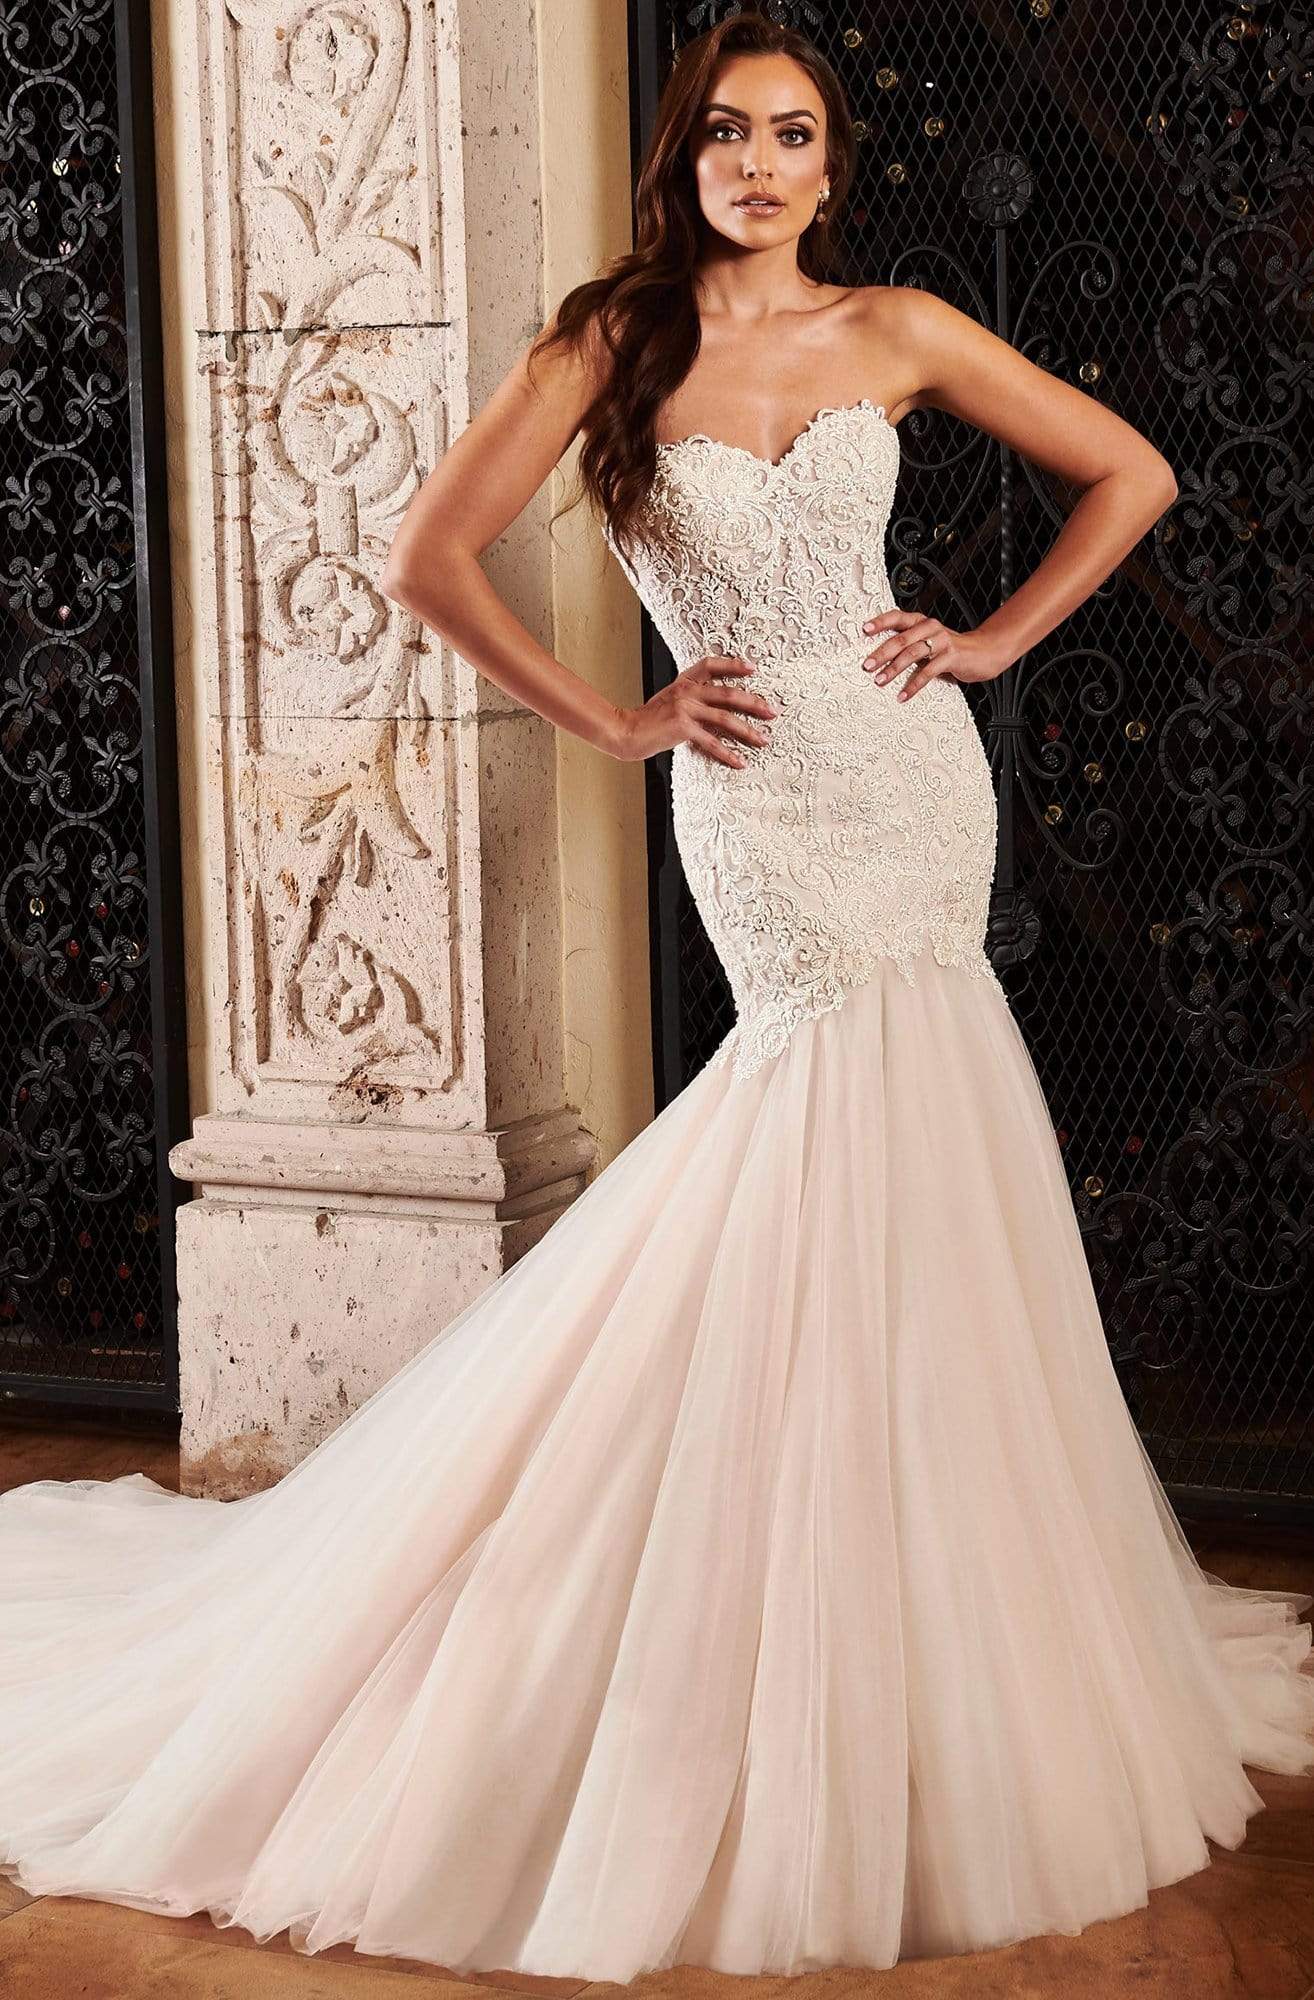 Lo'Adoro Bridal By Rachel Allan - M768 Sweetheart Lace Mermaid Gown Wedding Dresses 0 / Ivory Blush